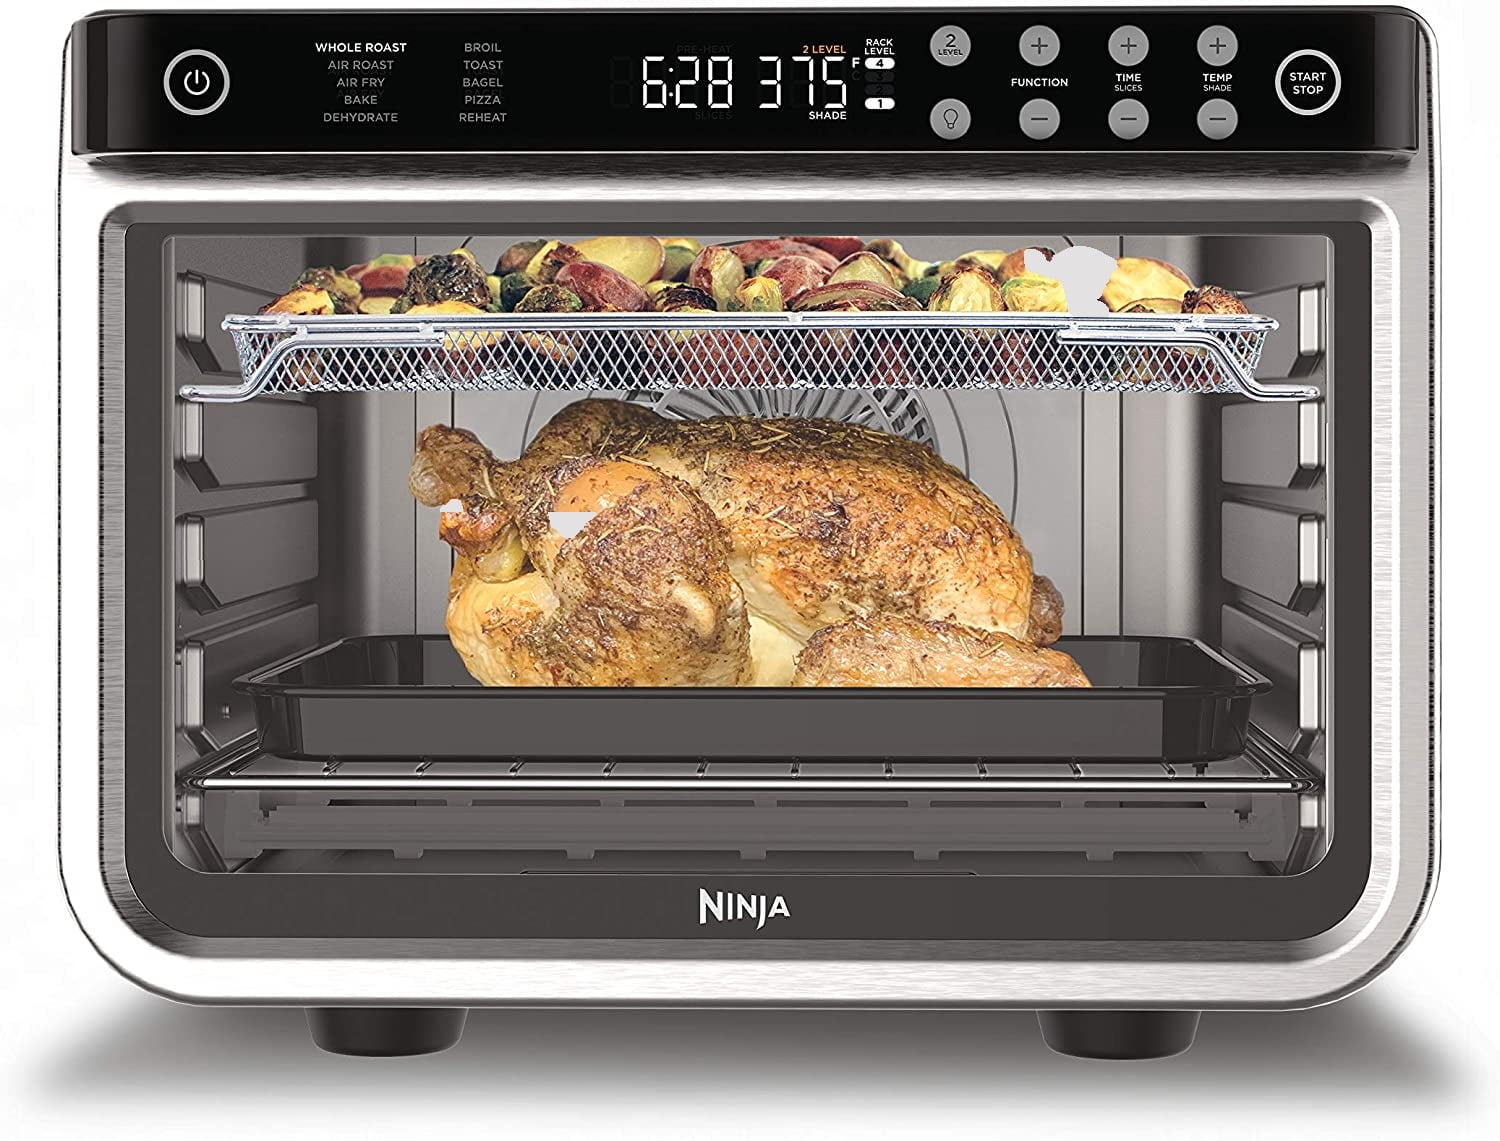 Ninja Foodi 10-in-1 XL Pro Air Fry Oven, 1800 watts